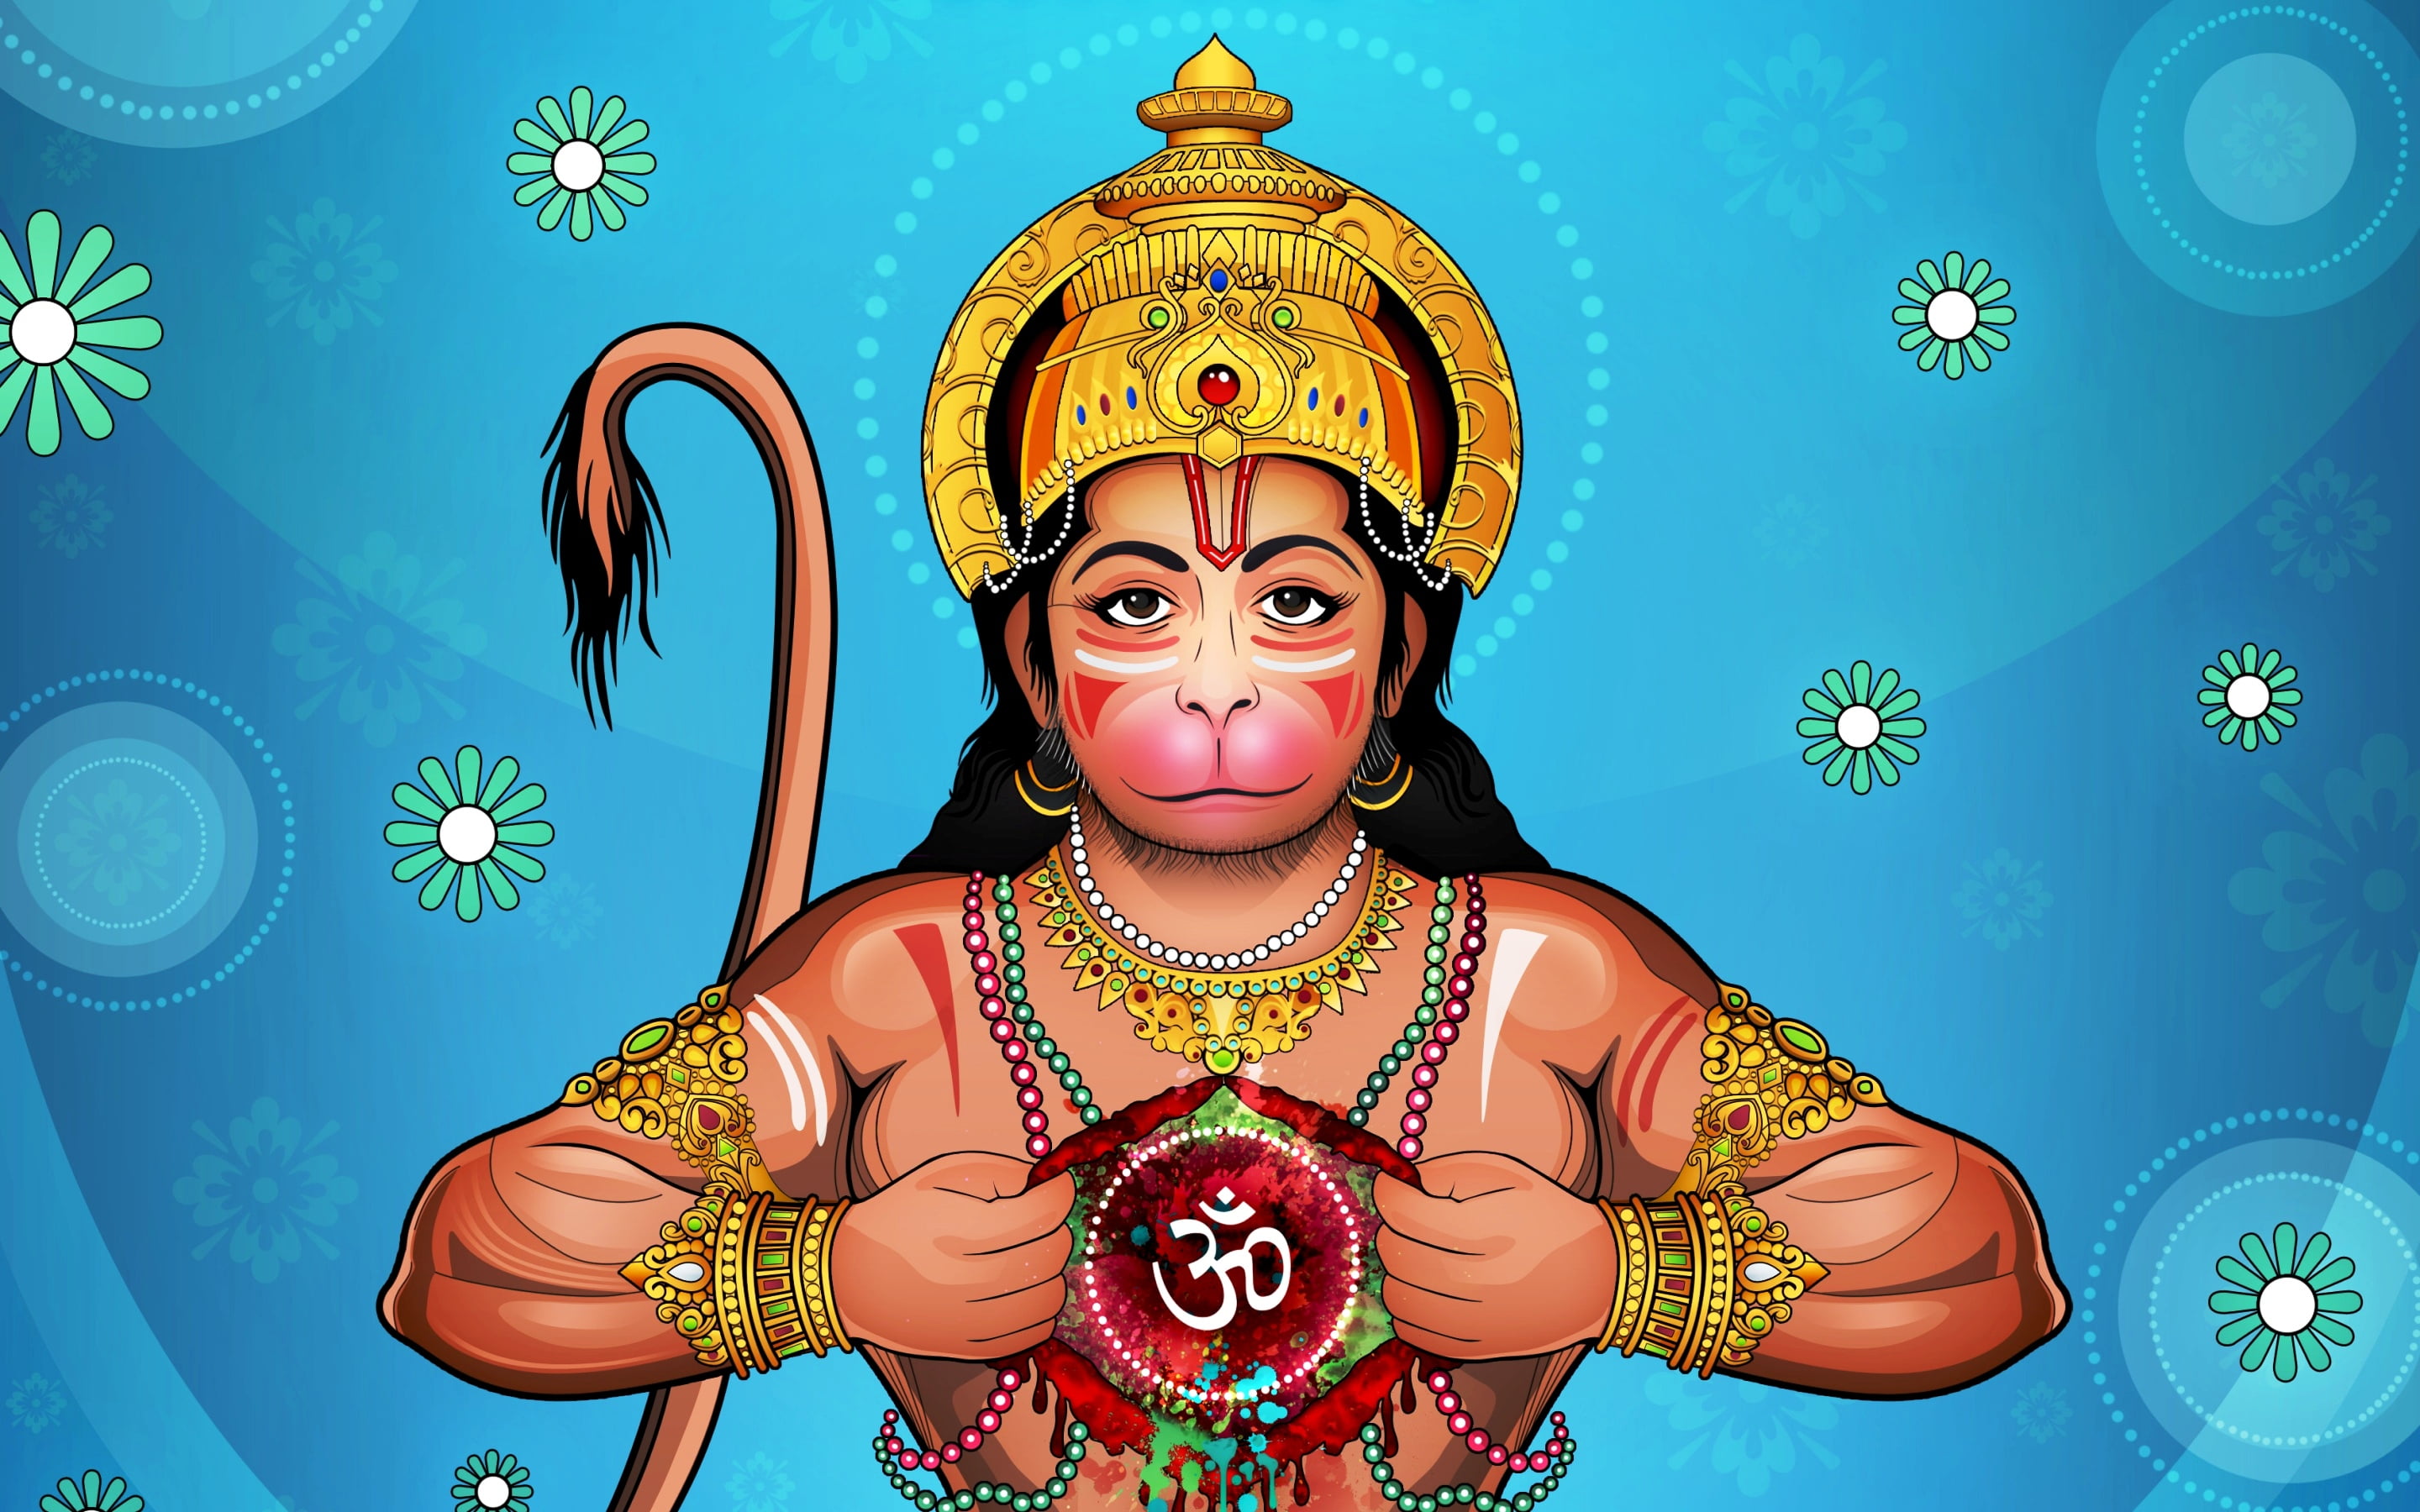 Hanuman Ji 4K, Hindu God illustration, Lord Hanuman, animated